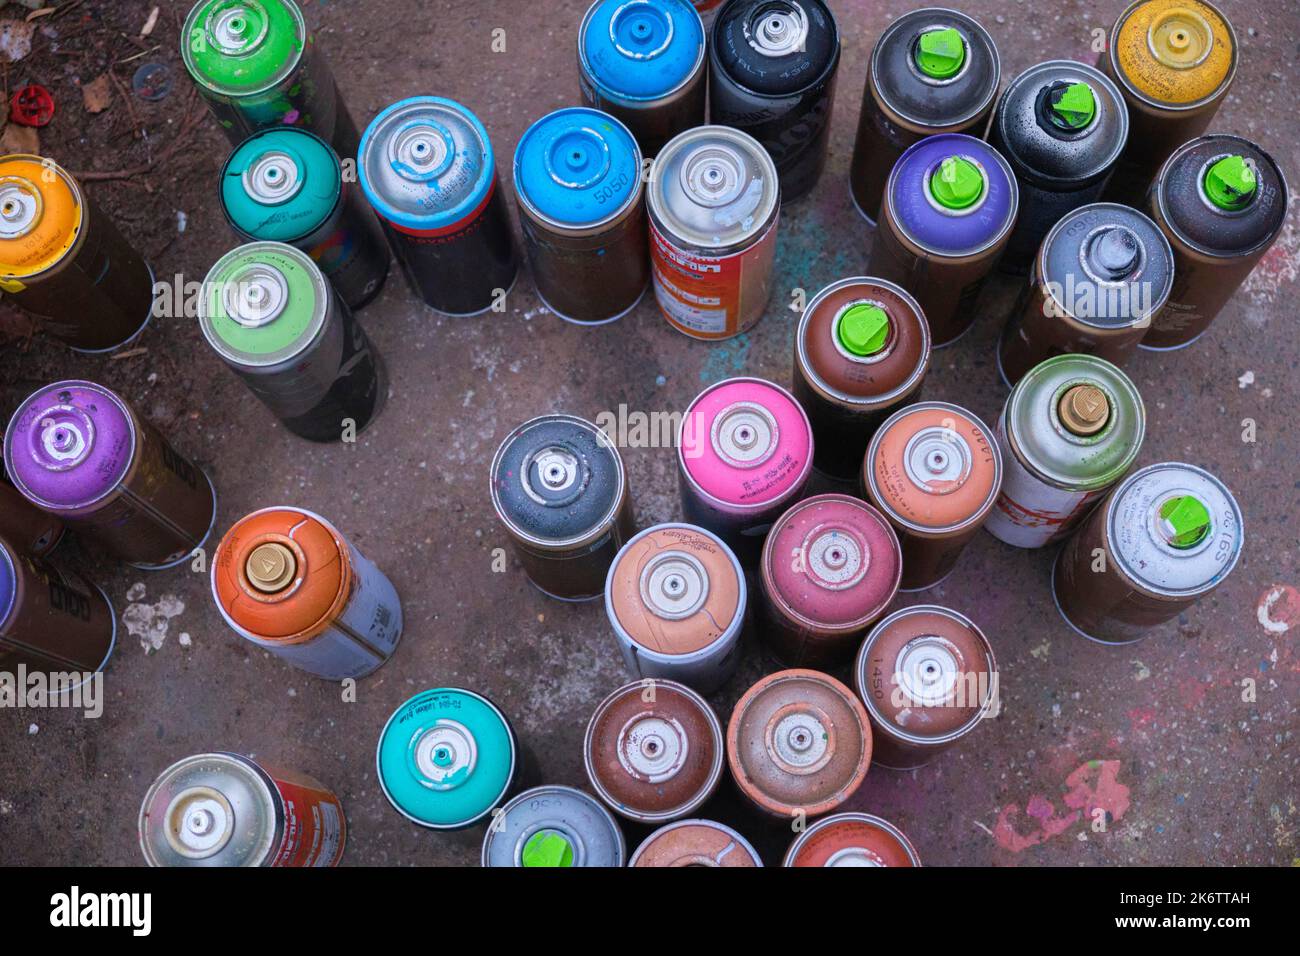 Germany, Berlin, 13. 12. 2020, graffiti wall, spray cans Stock Photo